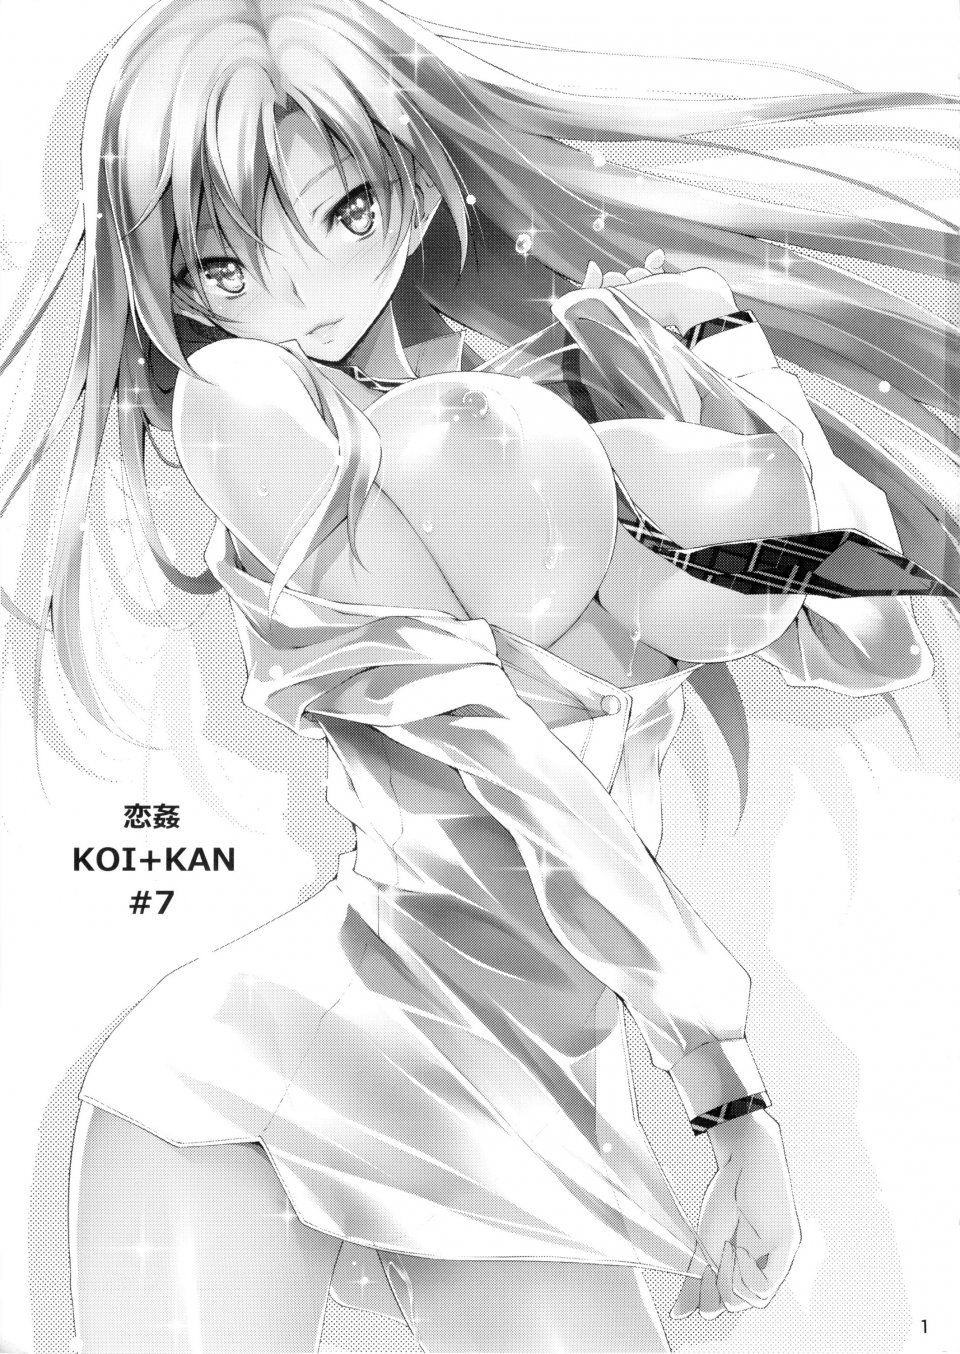 Kikurage - KOI+KAN 7 - Photo #3